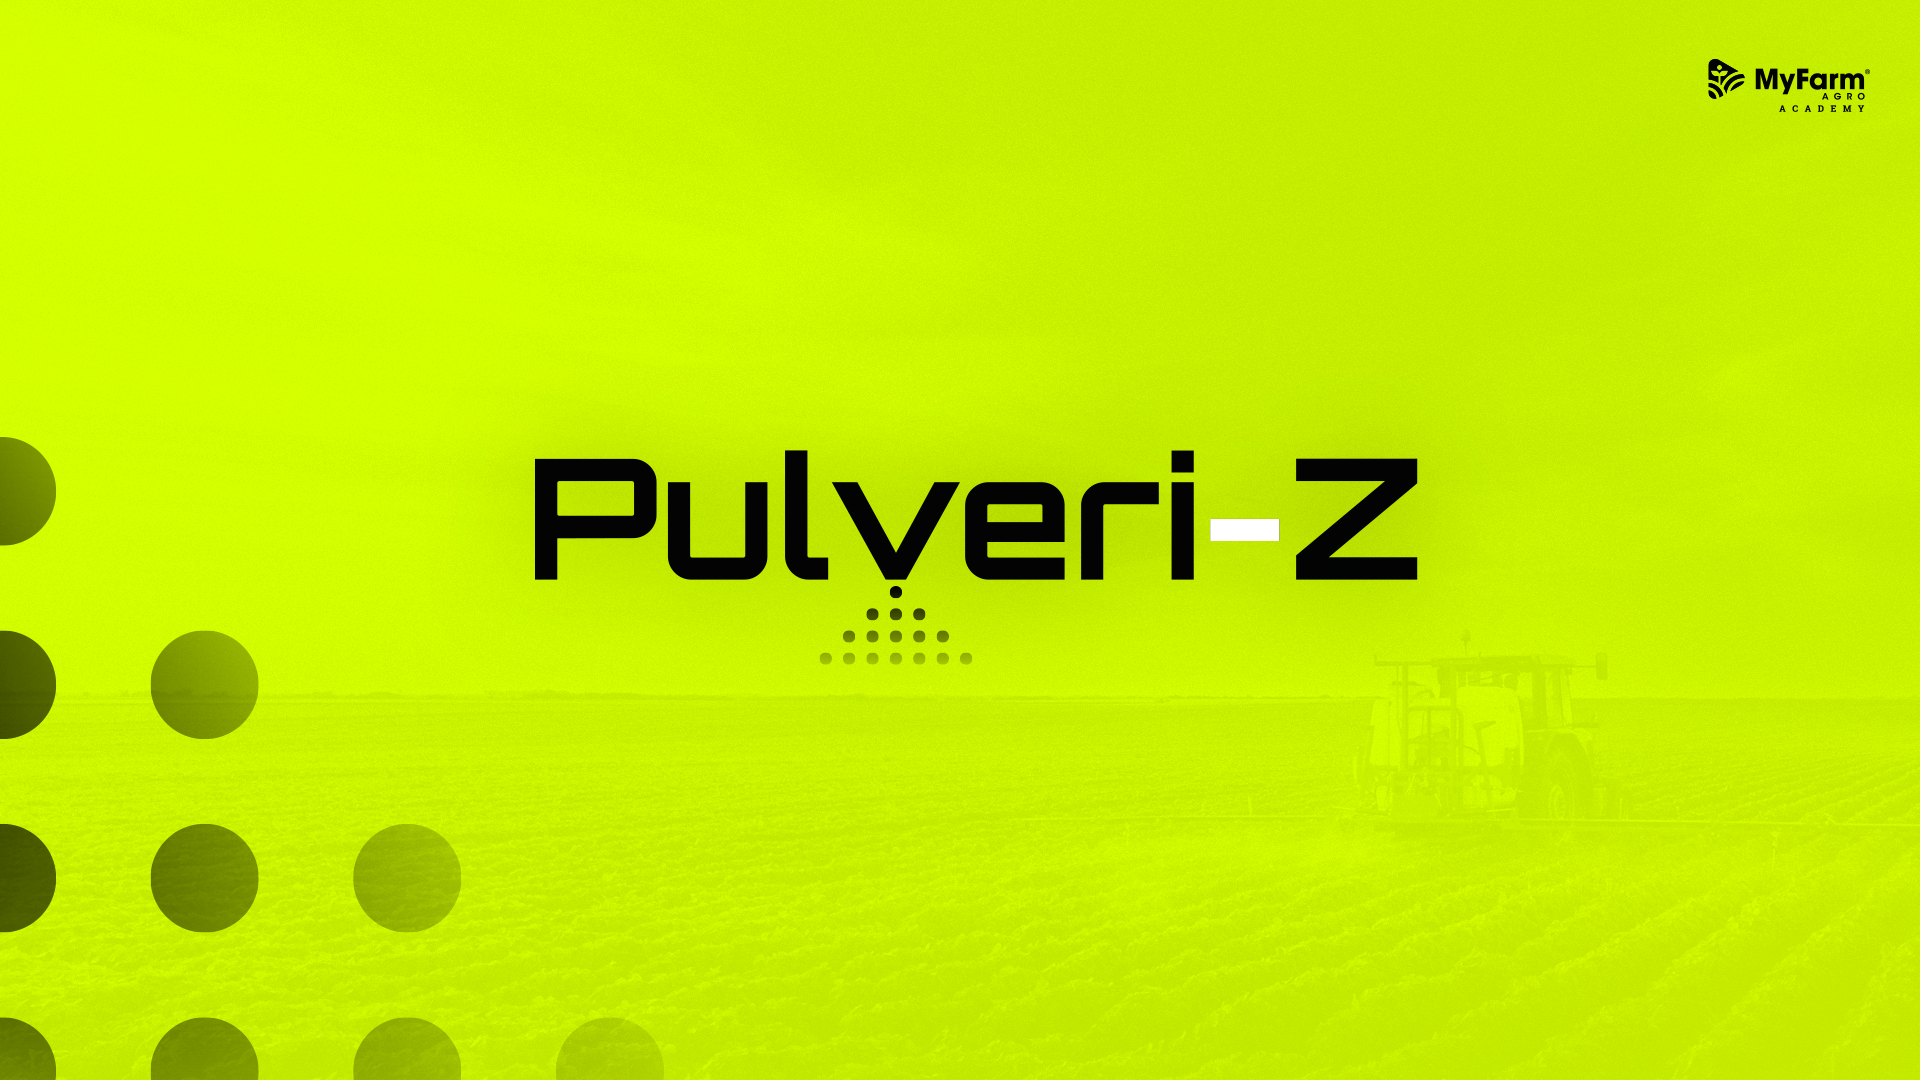 Pulveri-Z | Turma 02